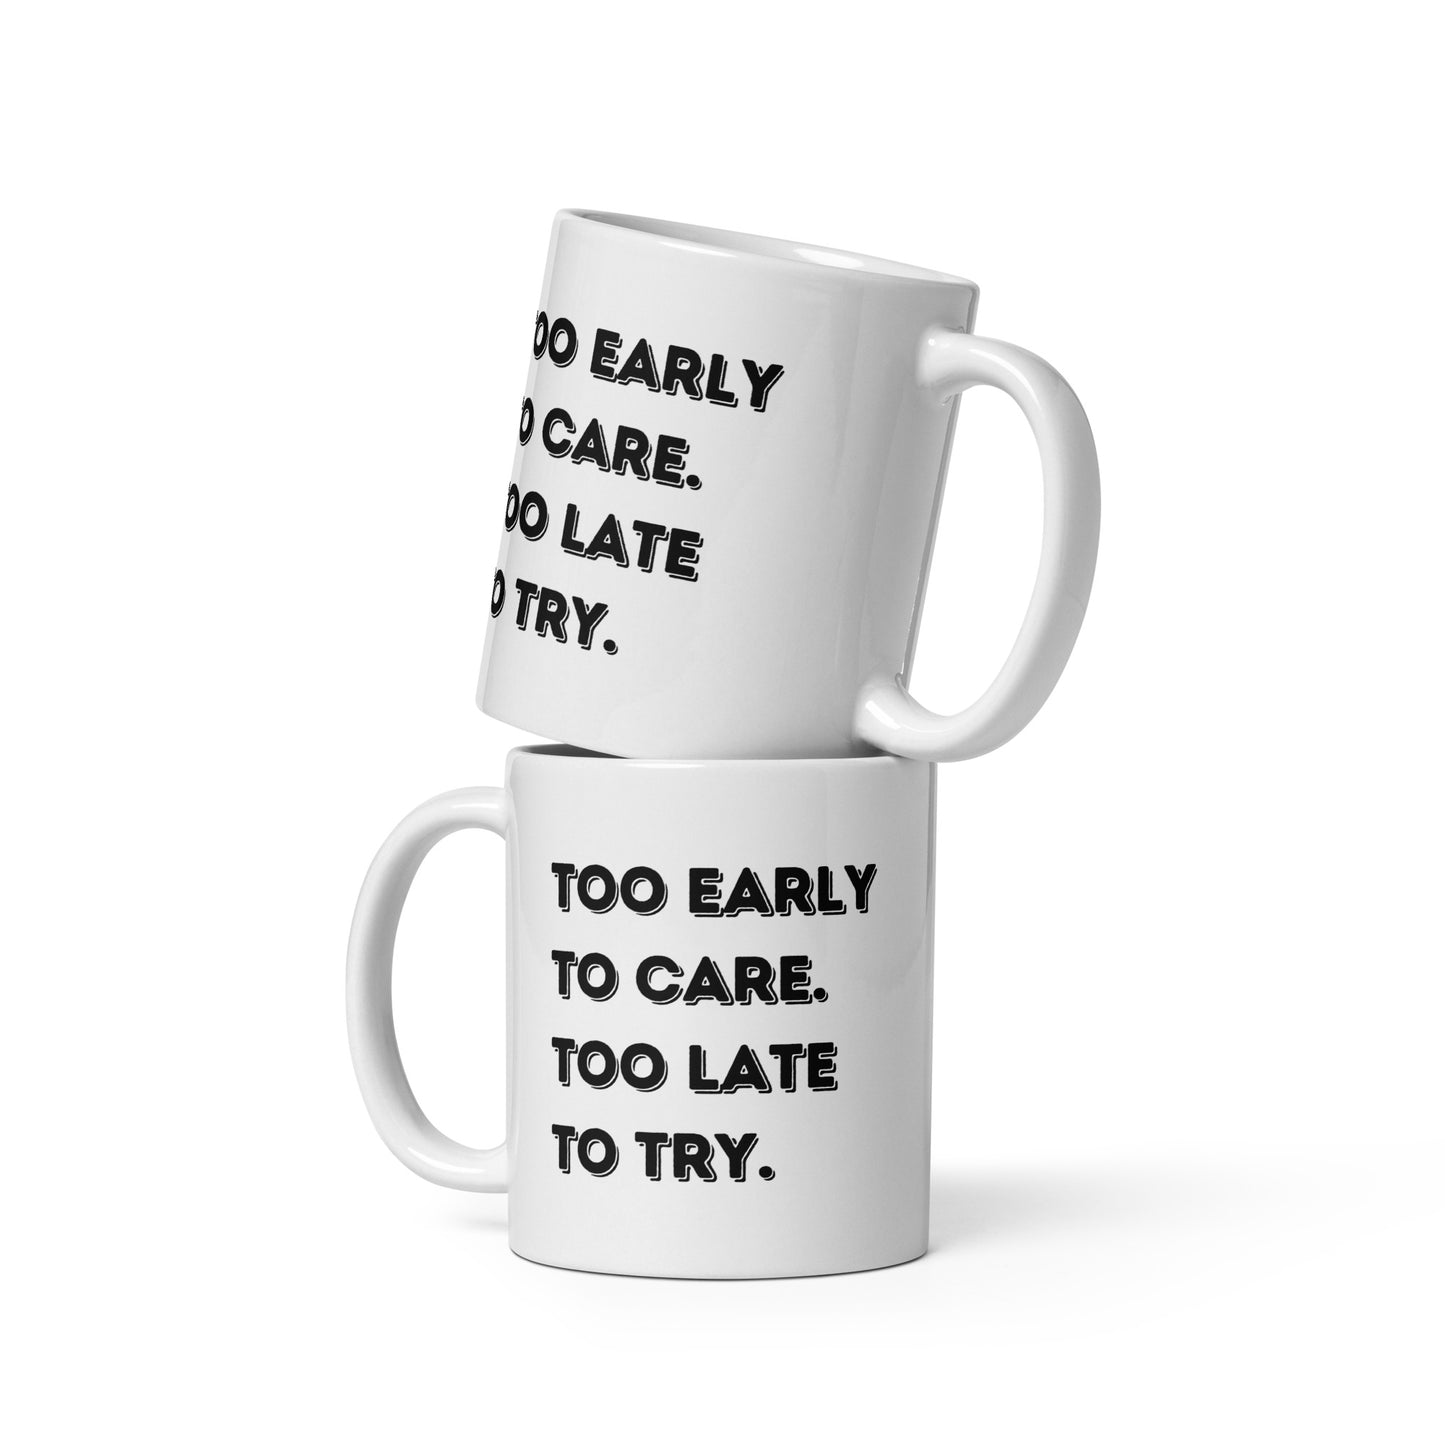 Funny Coffee Mug: "Too early to care. Too late to try."